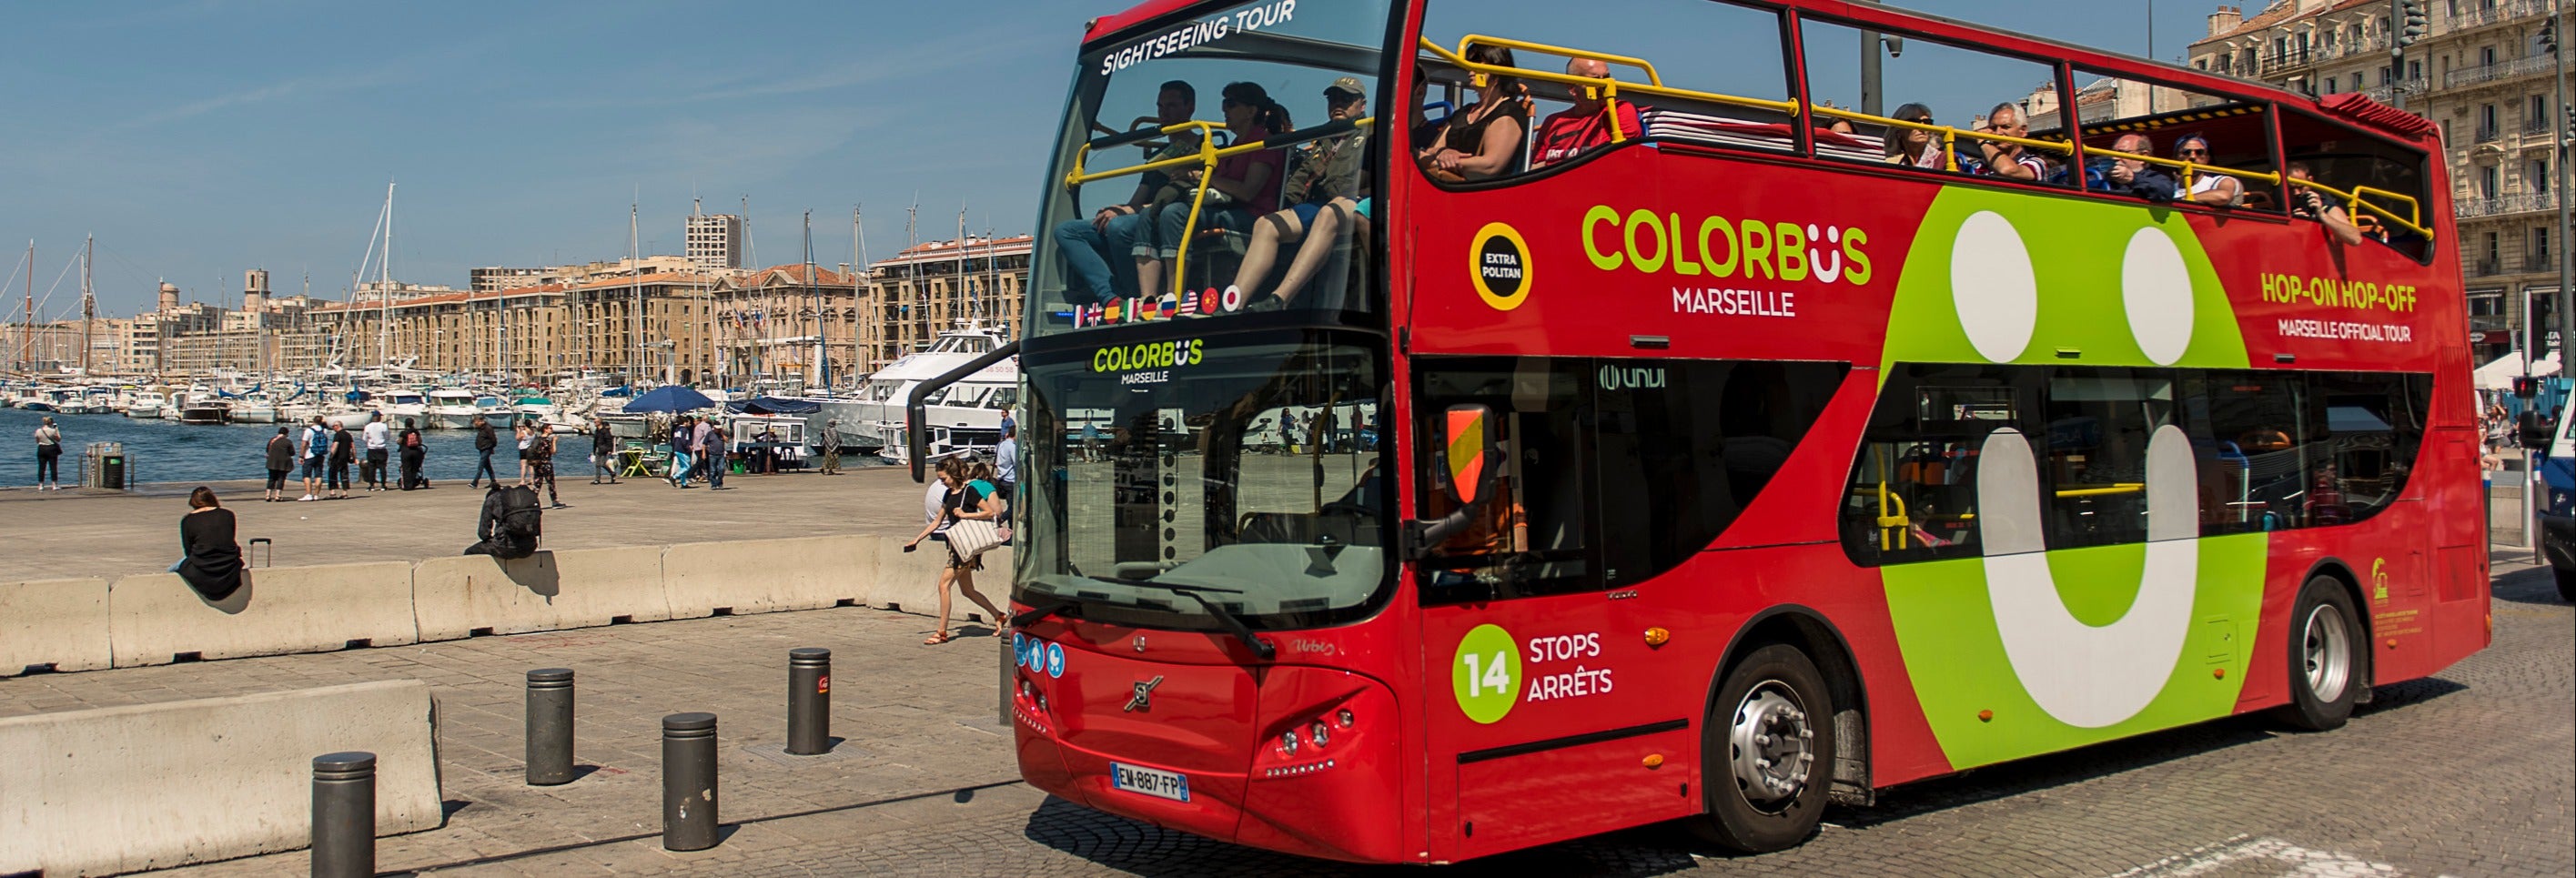 Ônibus turístico de Marselha